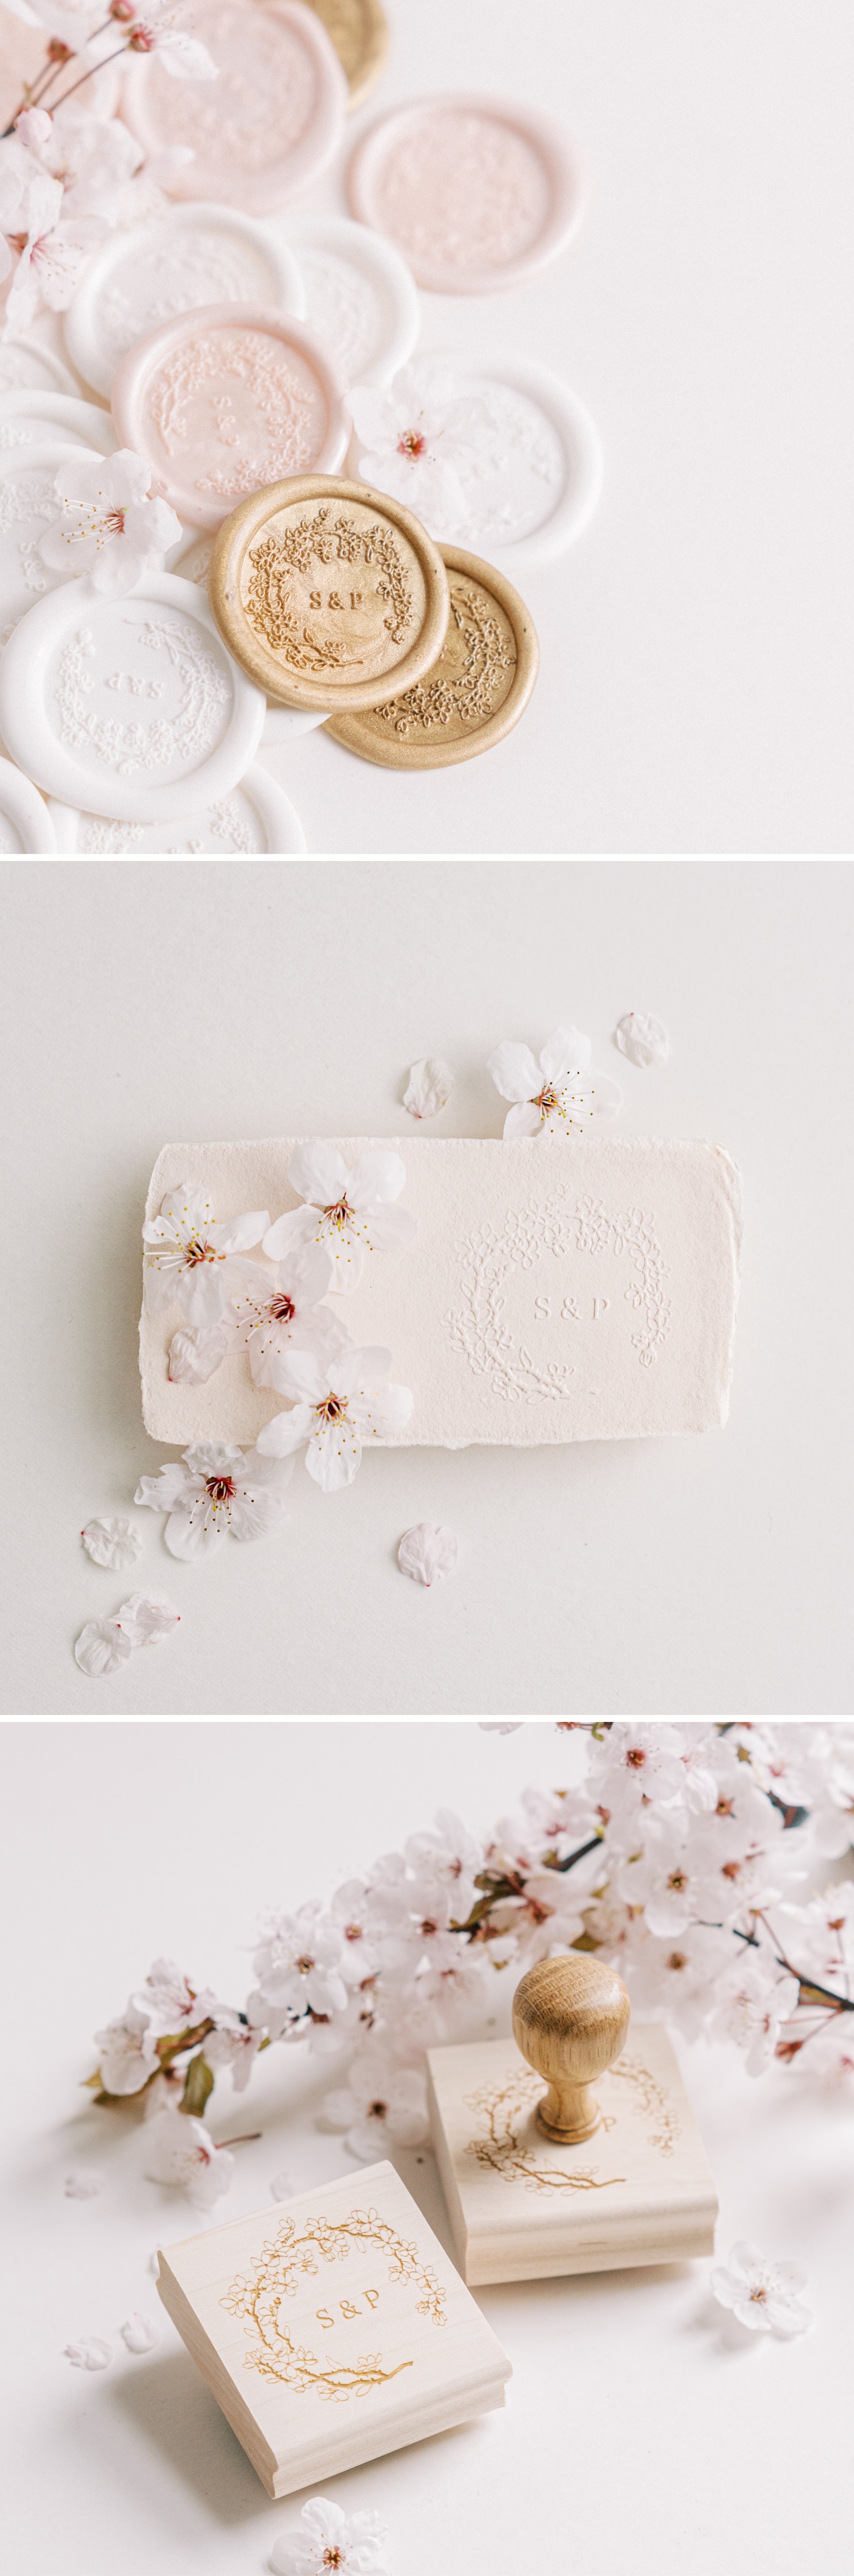 Ichika Cherry Blossom Monogram Design | Self-Adhesive Wax Seals Embosser & Rubber Stamp | 'Sakura' Cherry Blossom Embellishments for Blush Pink Spring Wedding | Heirloom Seals